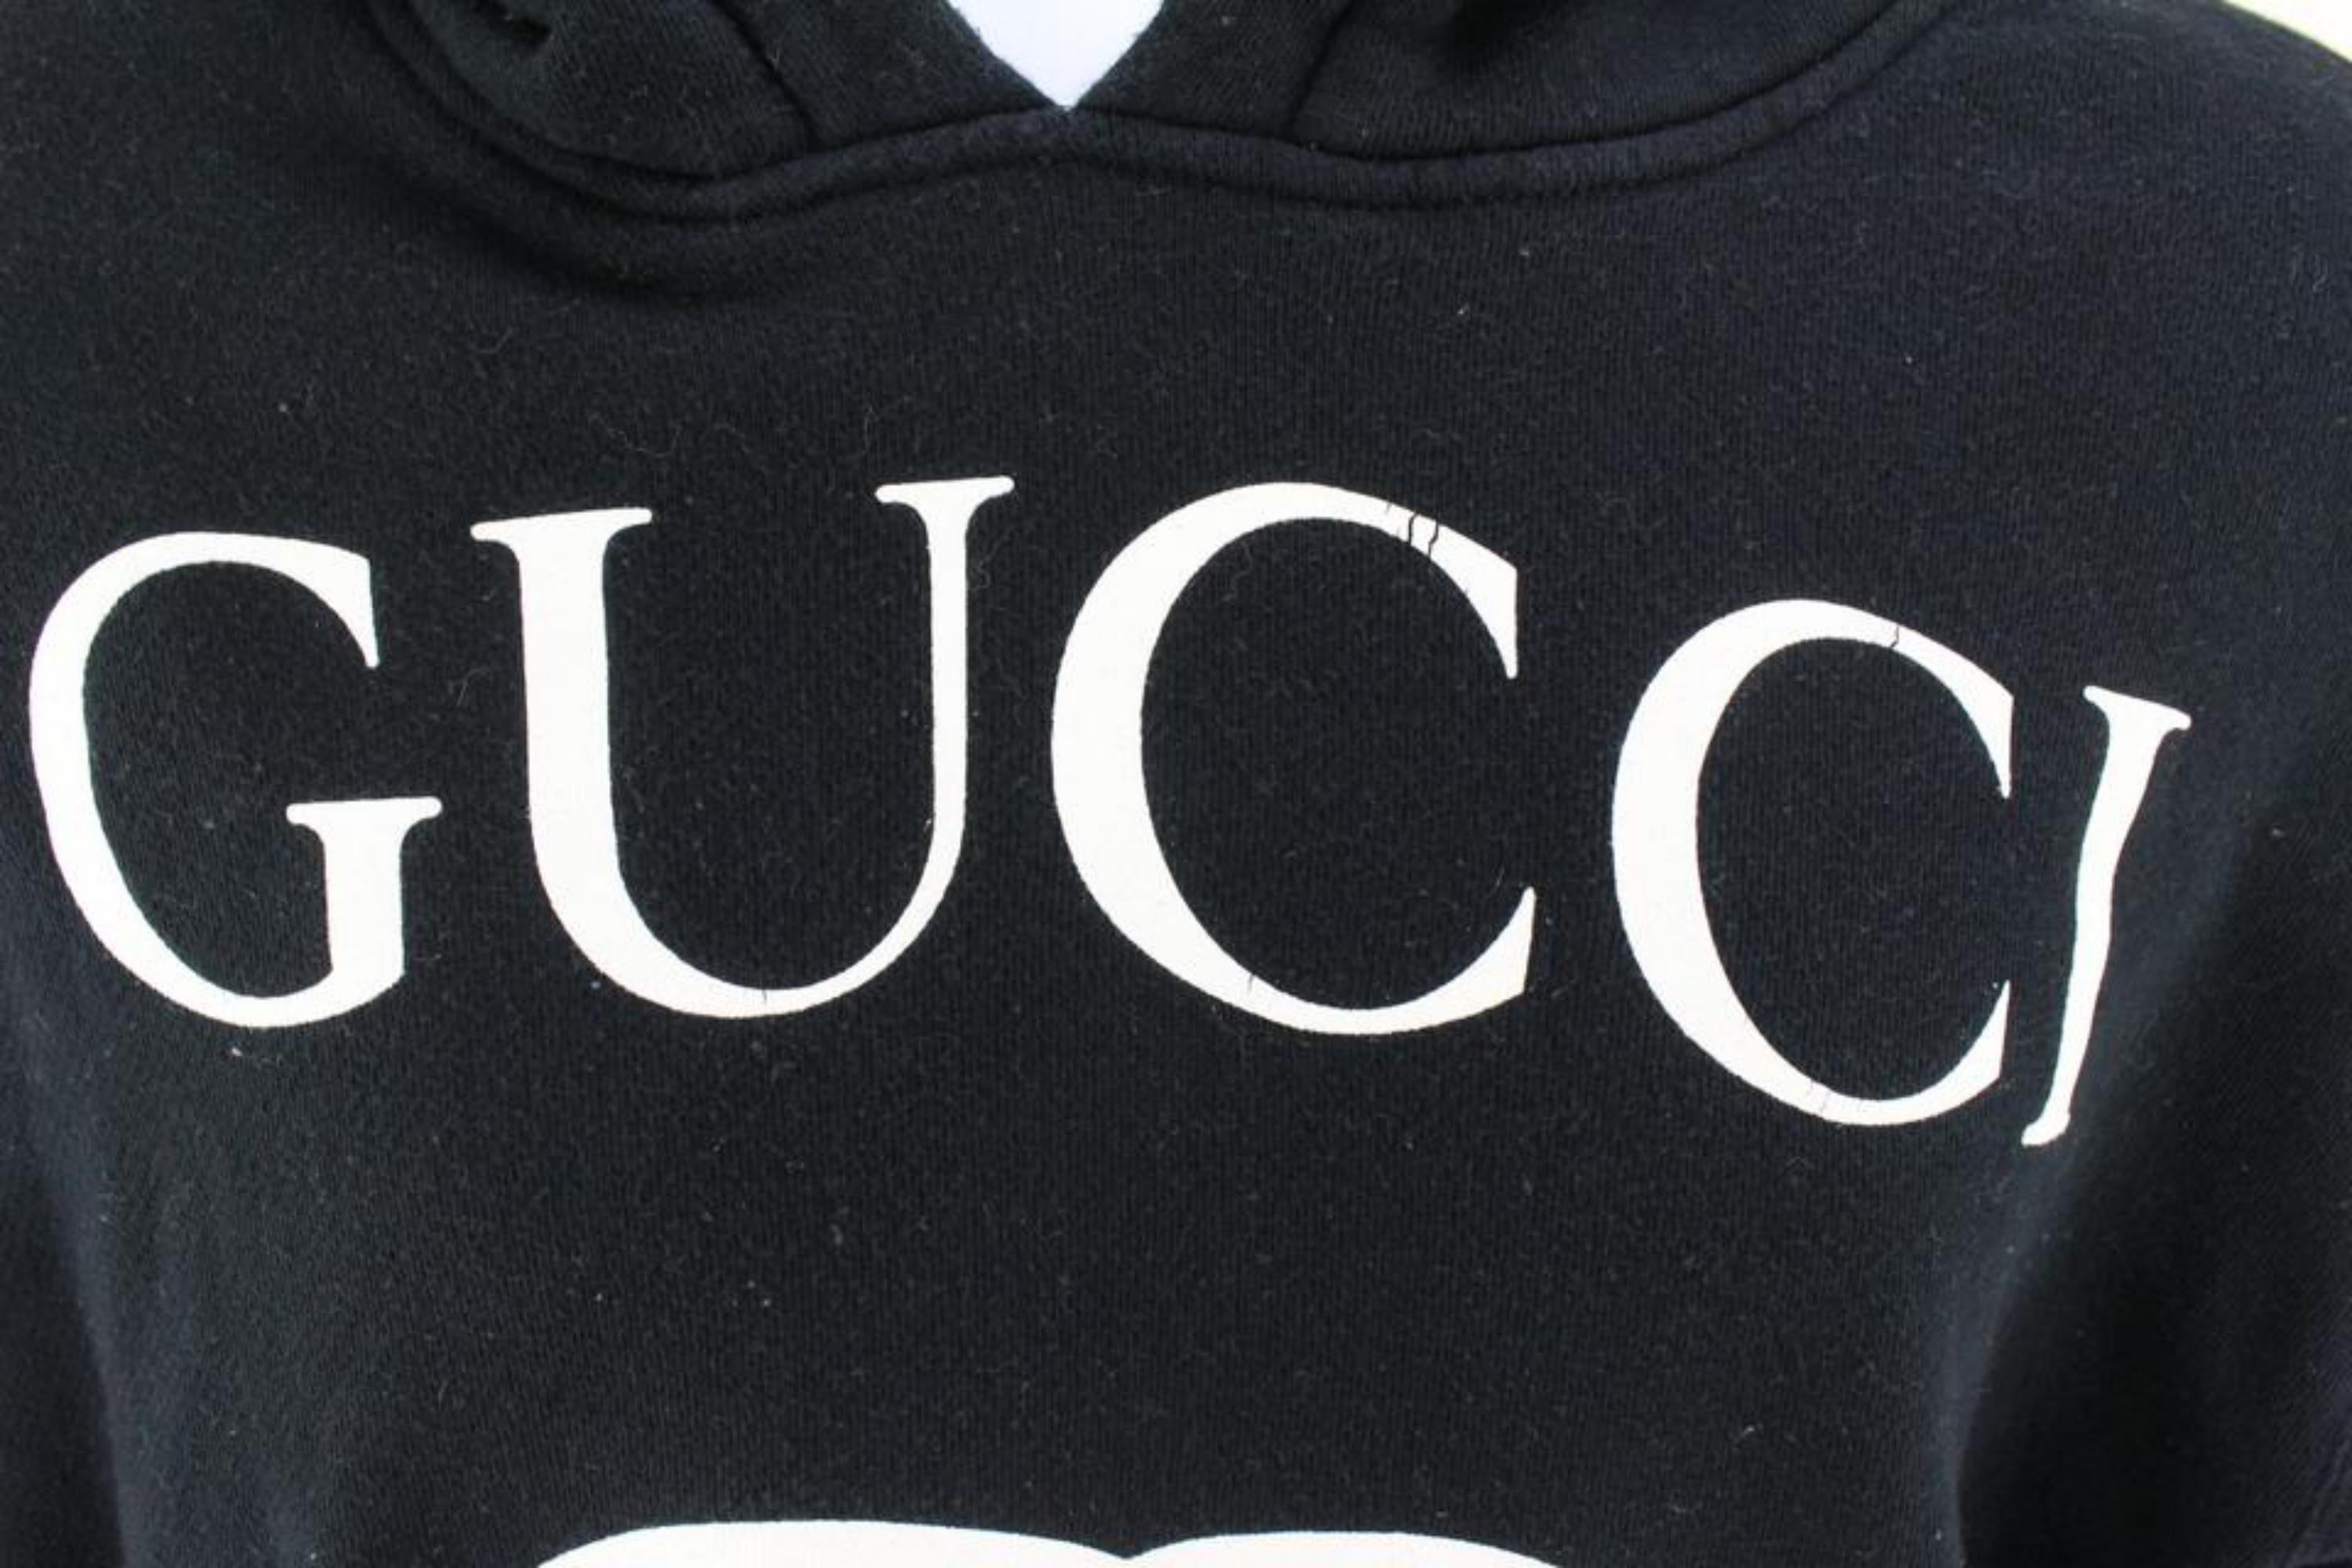 Gucci Men's M Oversized Interlocking GG Hoodie Sweatshirt 92gk711s 2